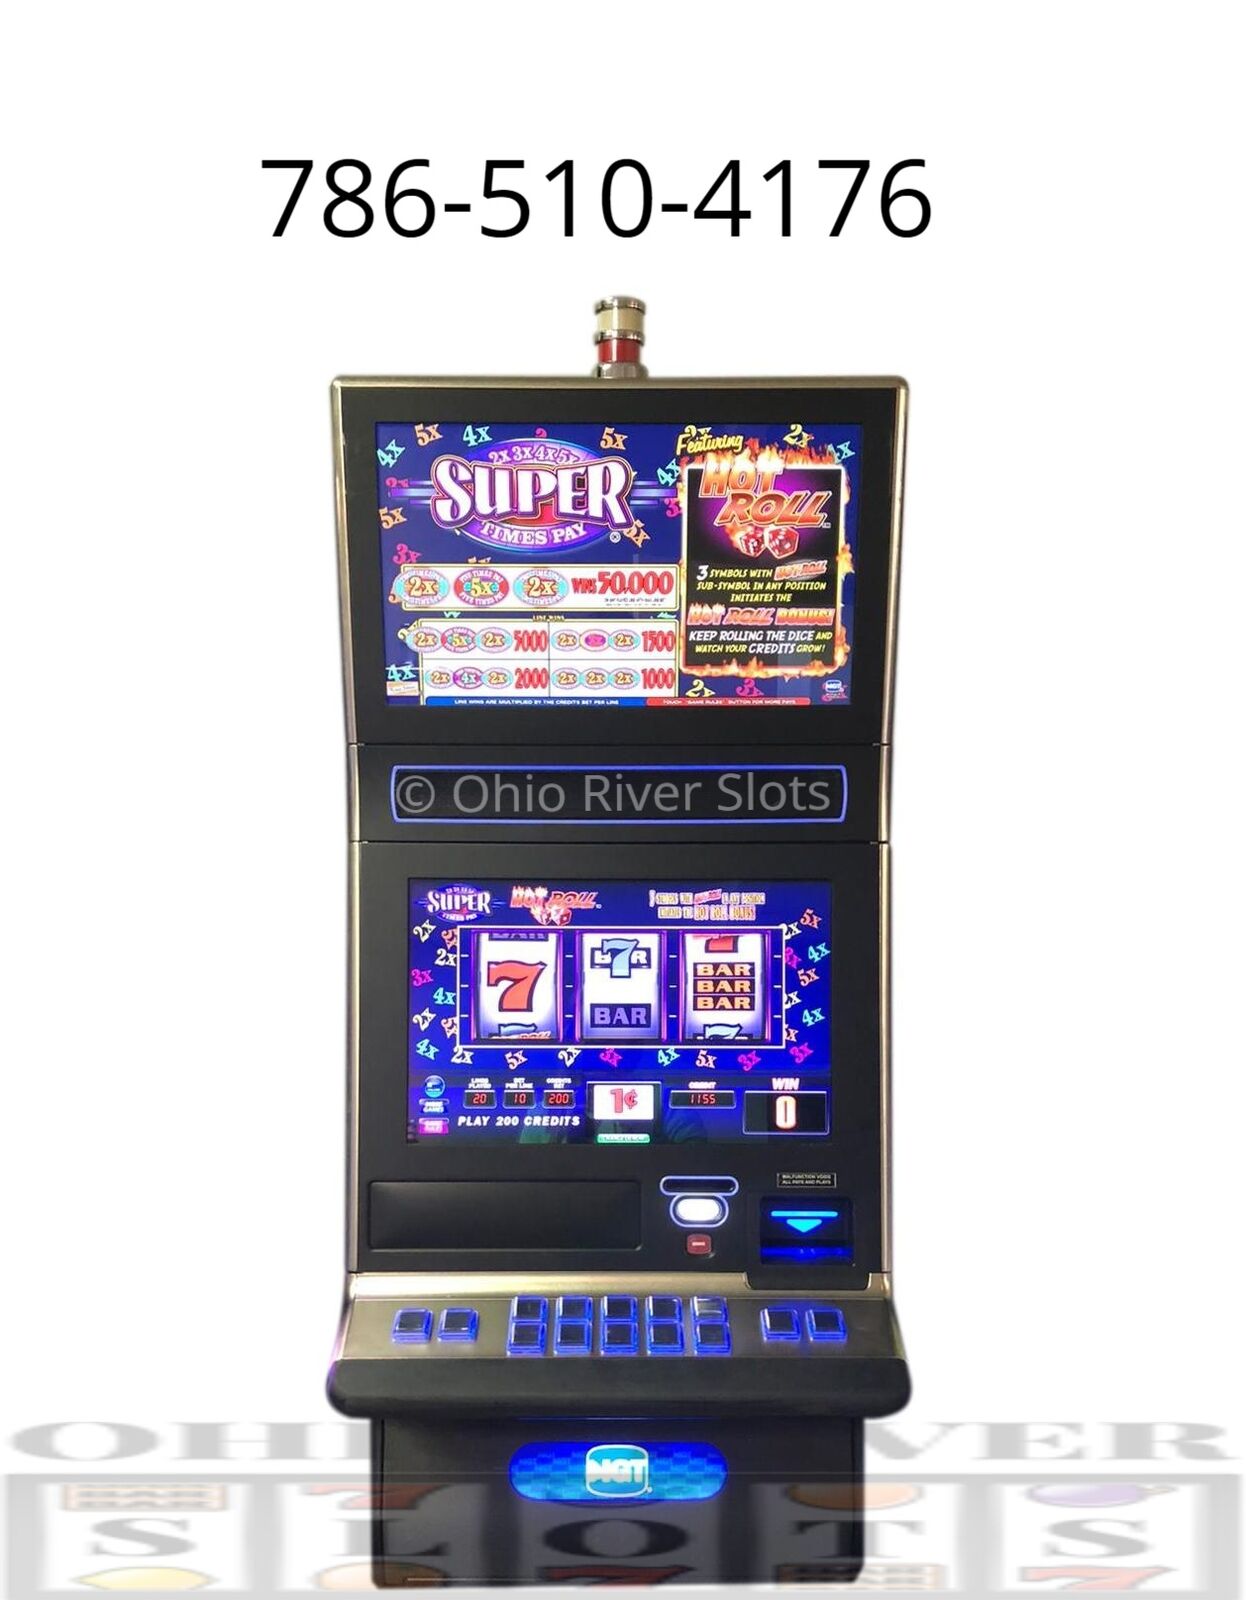 IGT G23 SLOT MACHINE Super 2x3x4x5x Times Pay (Free Play, Handpay, COINLESS)